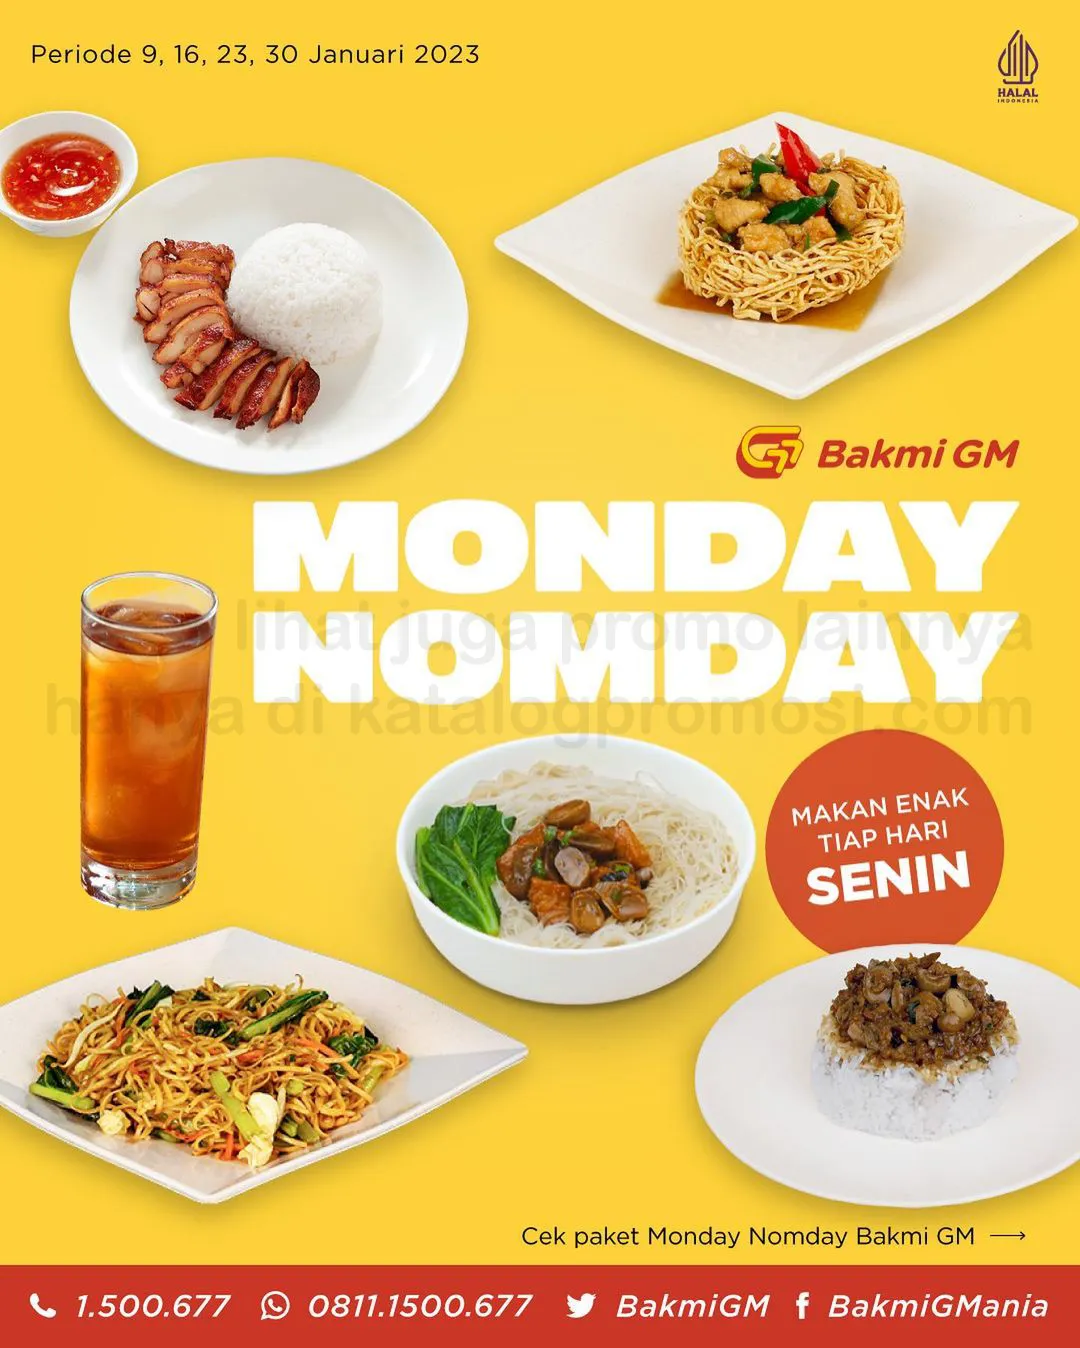 Promo BAKMI GM Monday Nomday - Harga Spesial untuk Menu Favorit